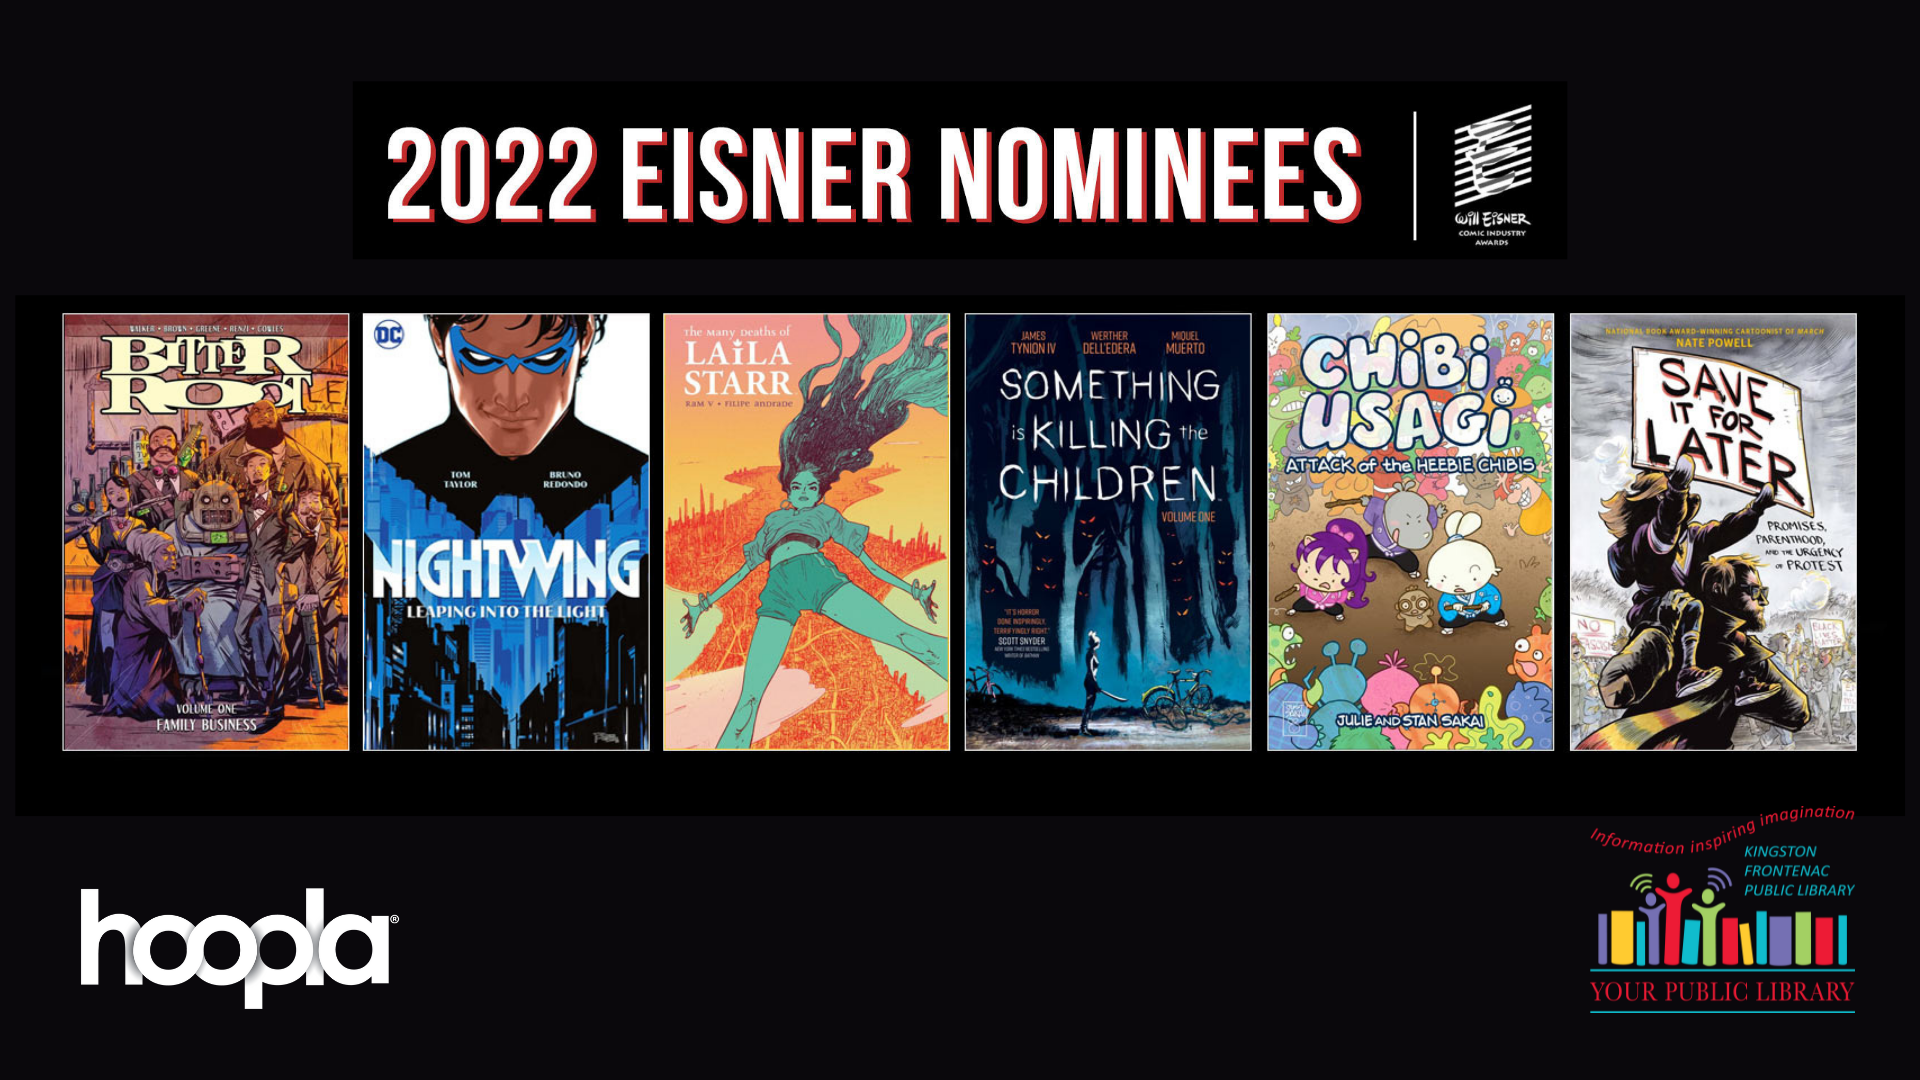 2022 Eisner nominee digital comics are here! Kingston Frontenac